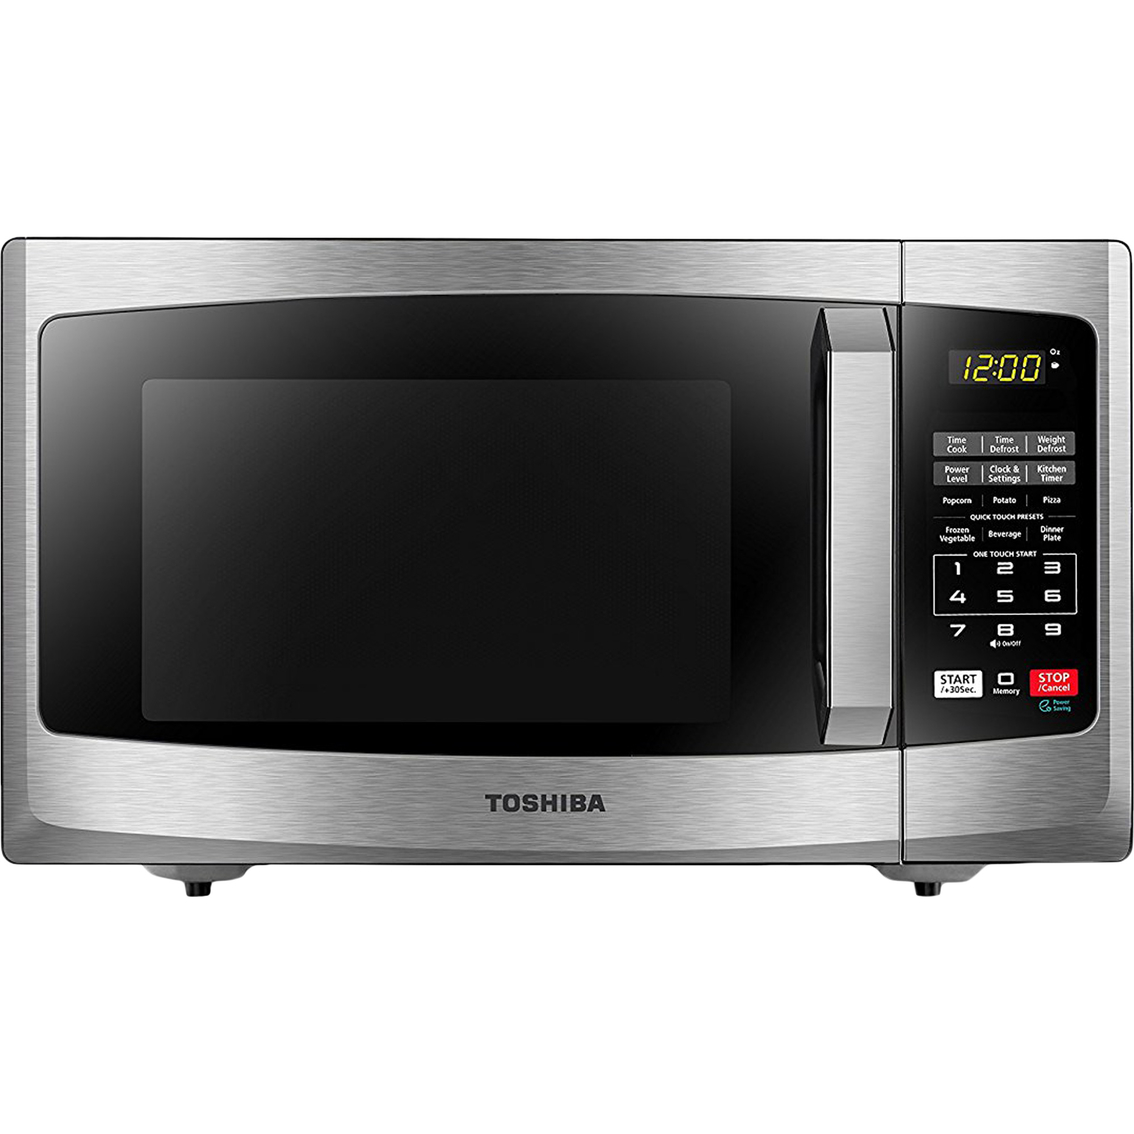 Toshiba 0.9 Cu. Ft. Microwave | Microwave Ovens | Back To School Shop